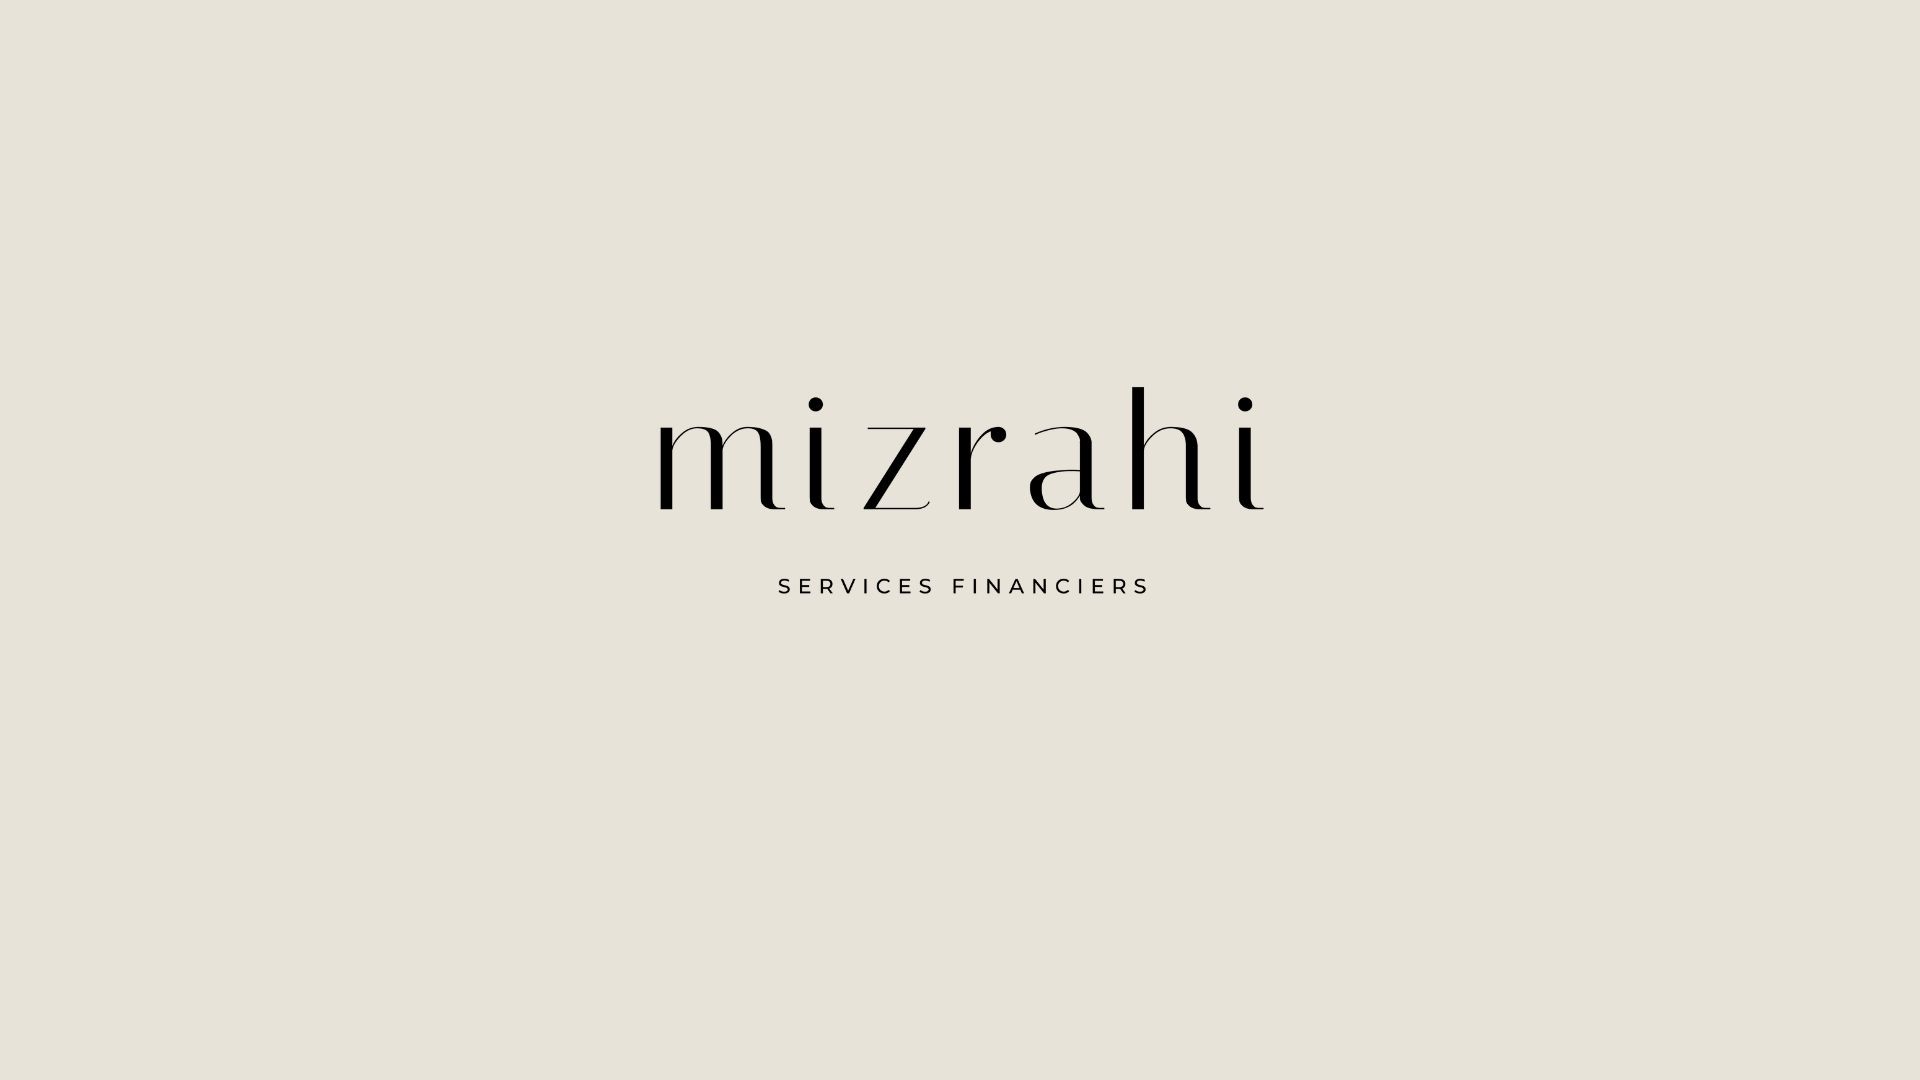 Mizrahi Services financiers